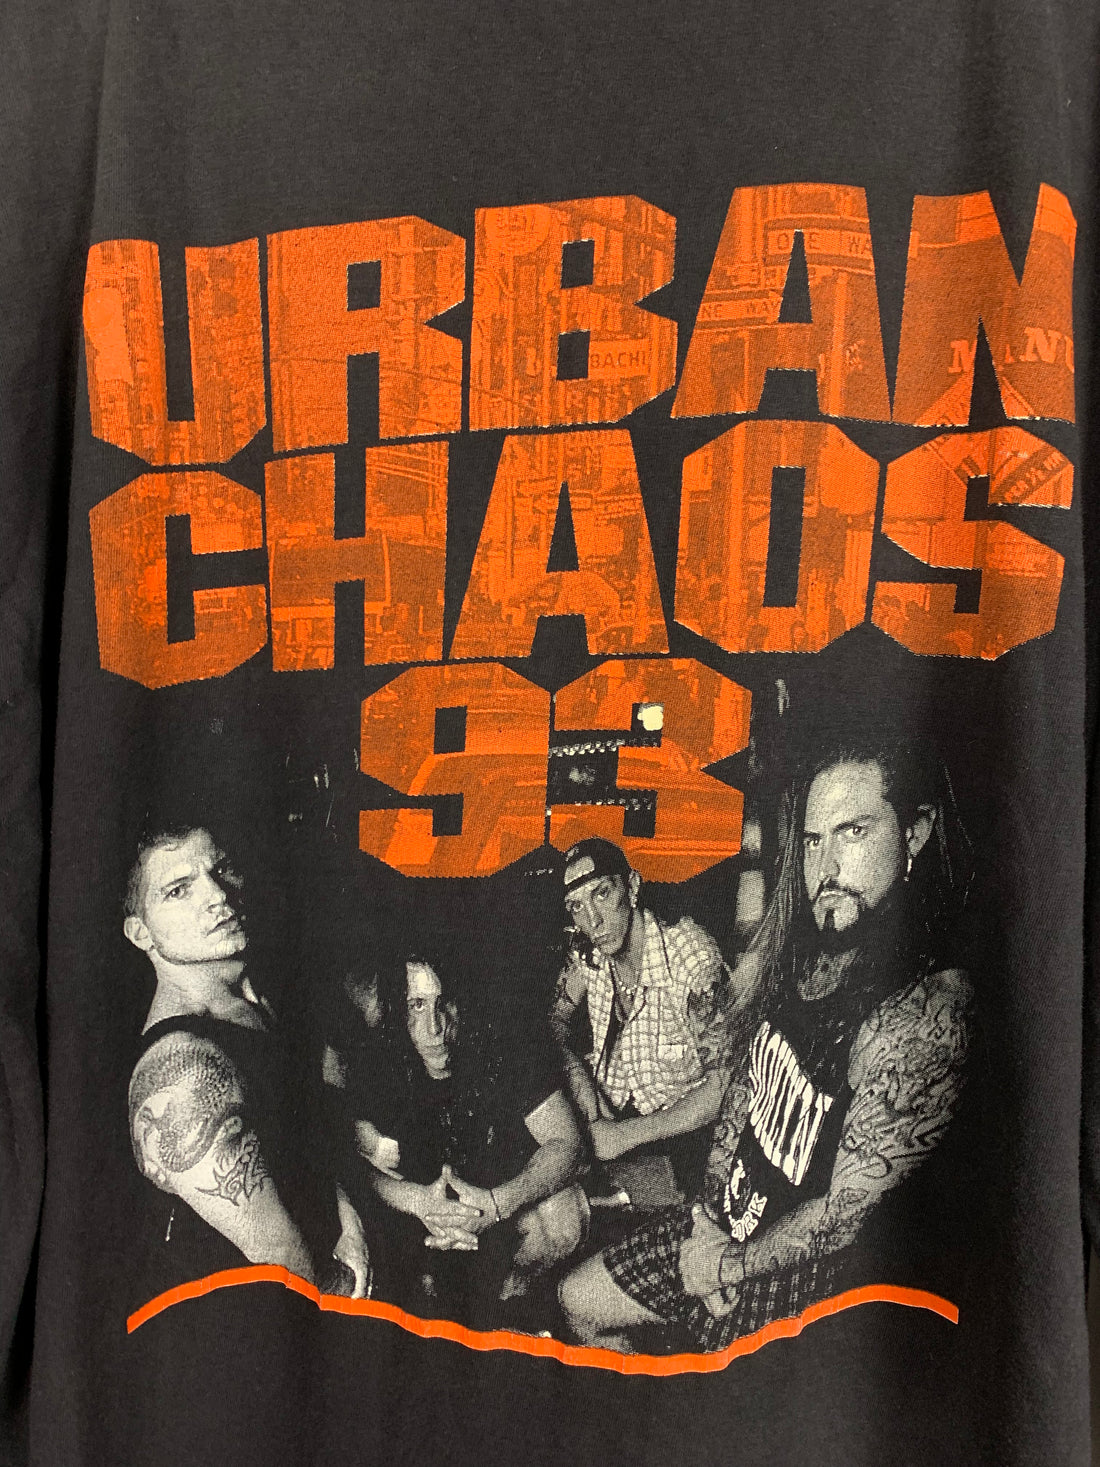 Biohazard 1993 Urban Chaos Longsleeve